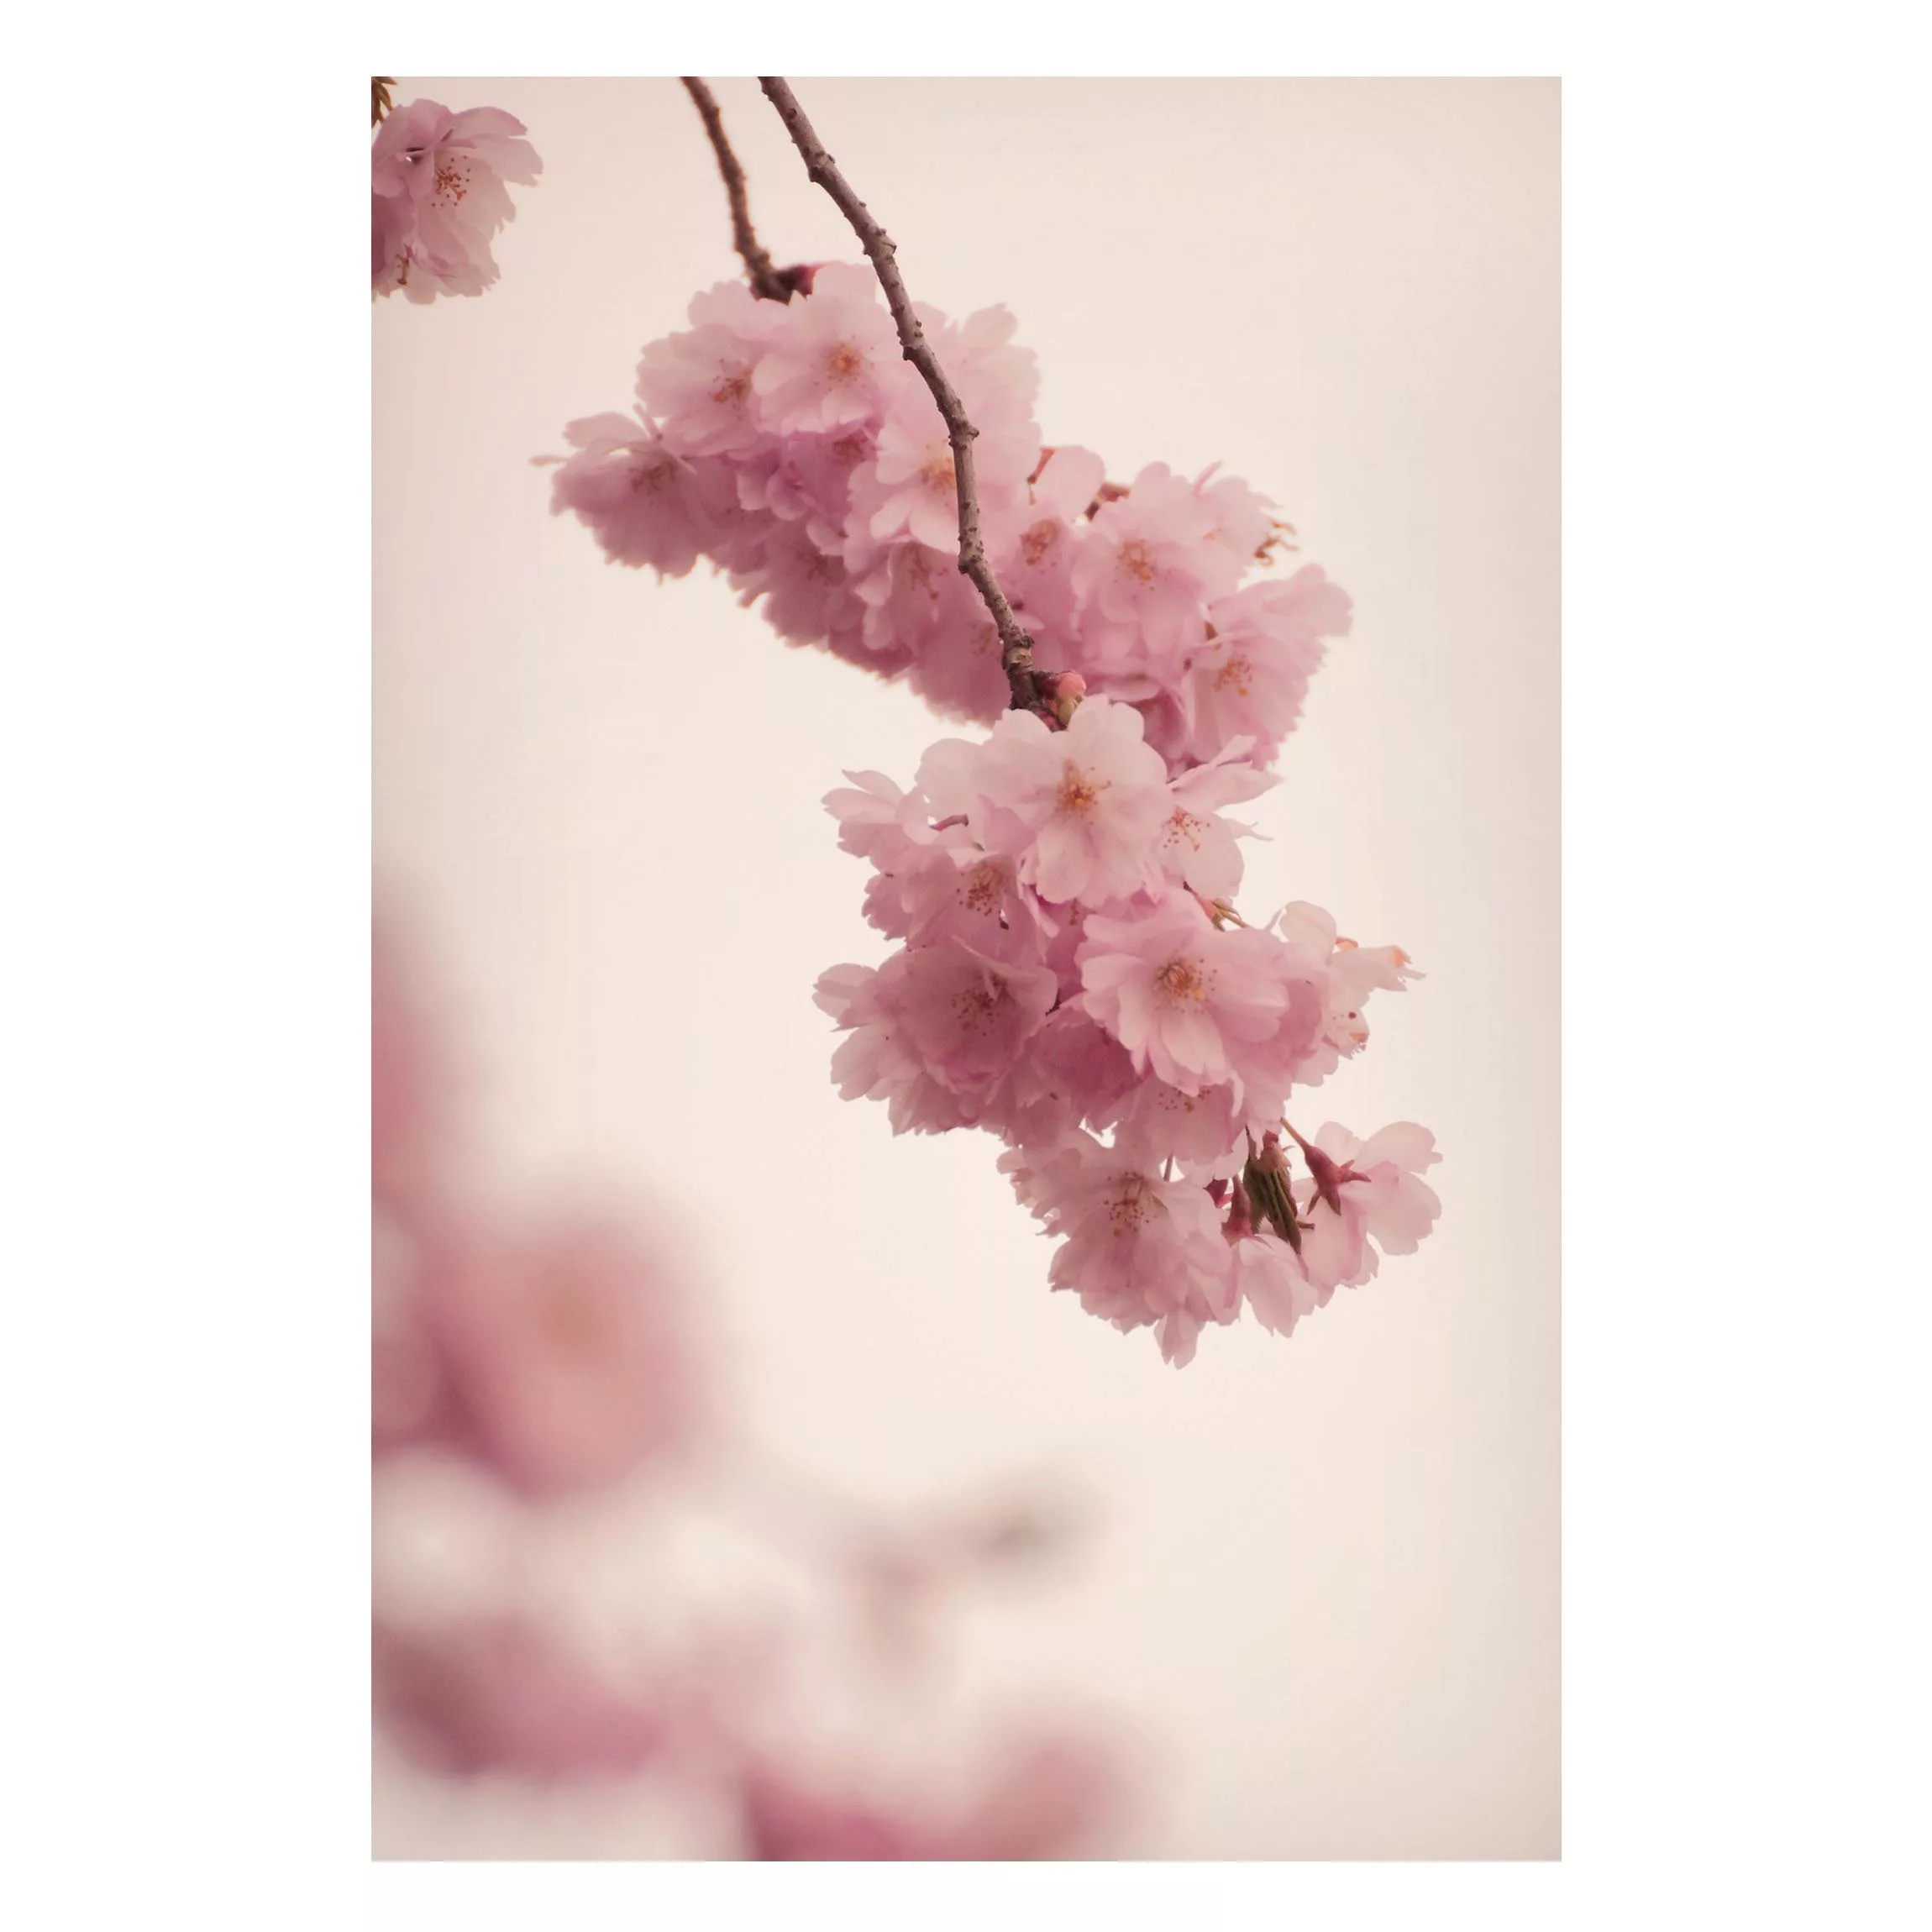 Magnettafel Zartrosane Frühlingsblüte mit Bokeh günstig online kaufen